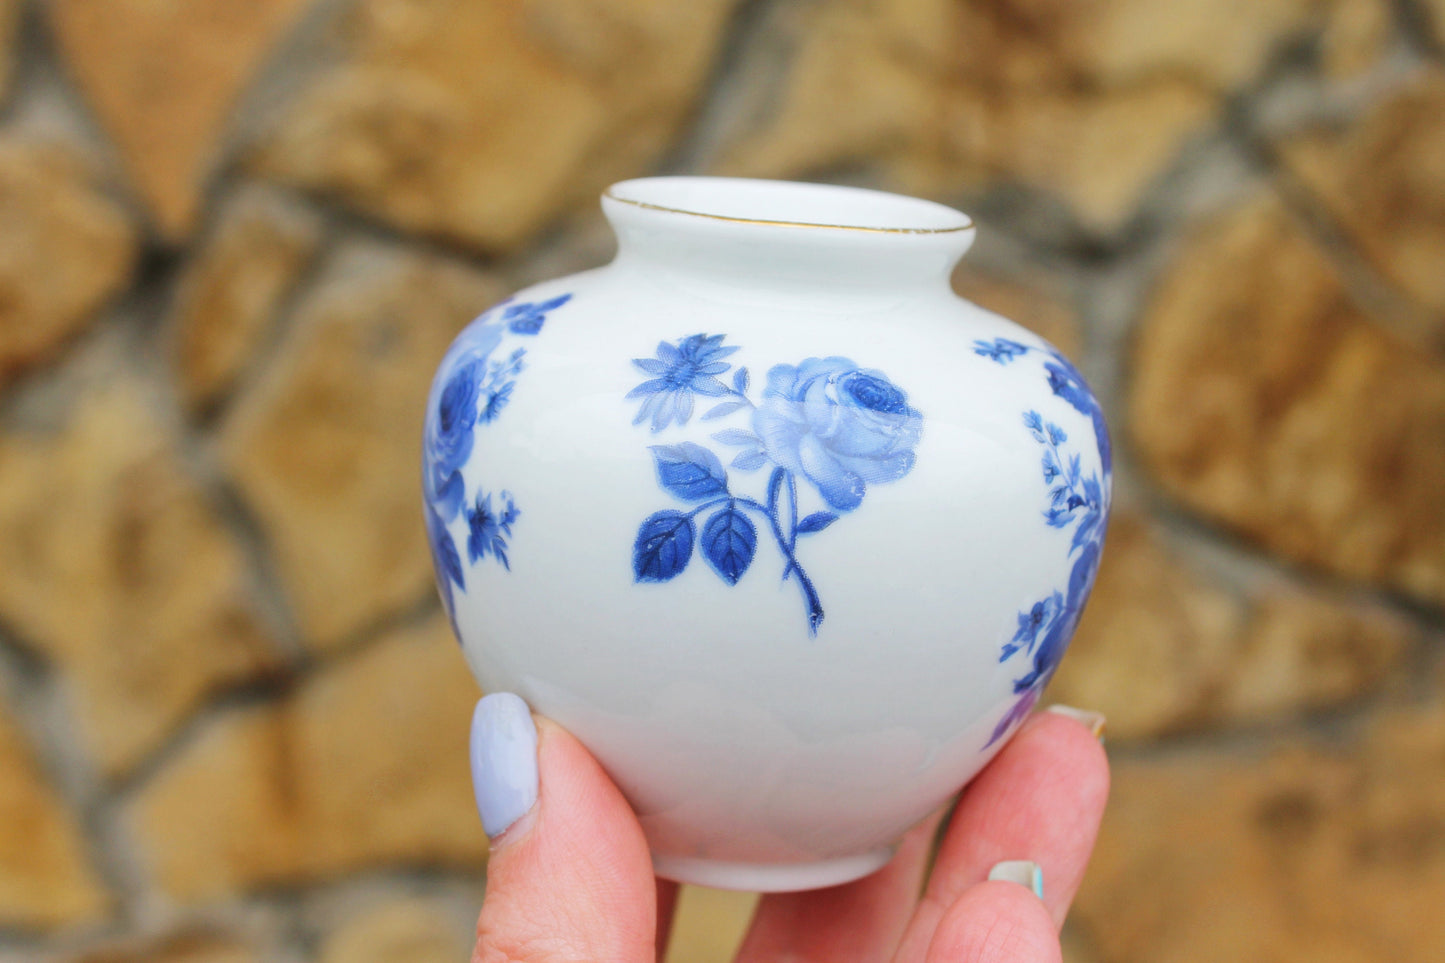 Vintage porcelain small vase 2.8 inches - made in Germany  - mini vase - cute vintage mini vase - 1960-1970s